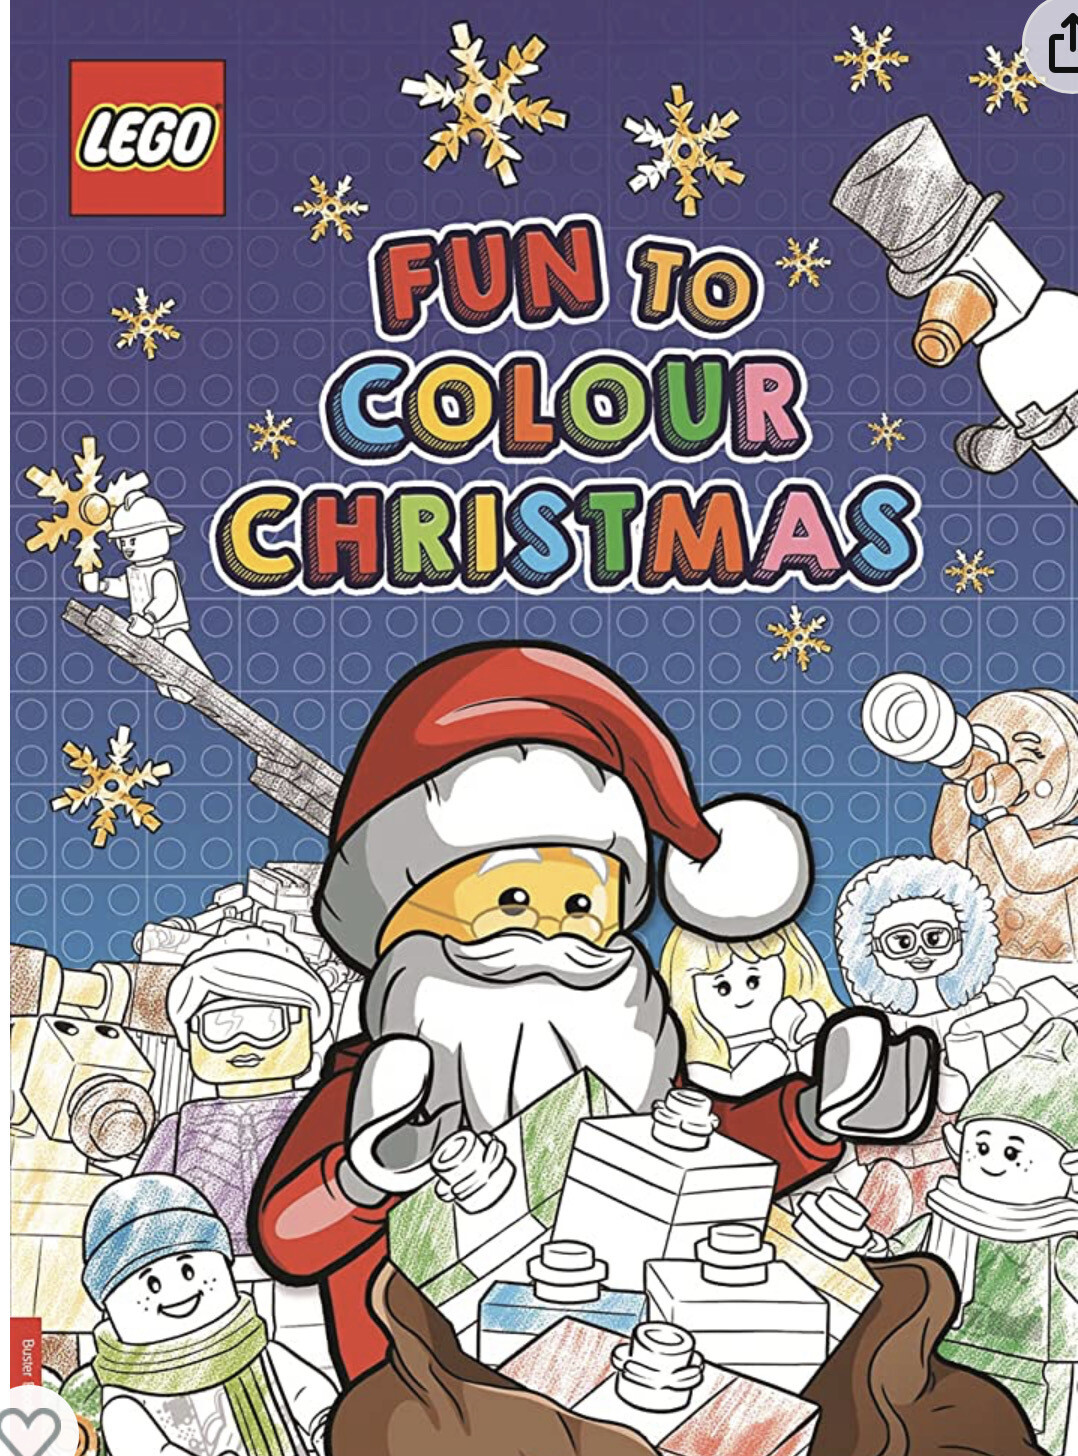 Lego. Fun To Colour Christmas